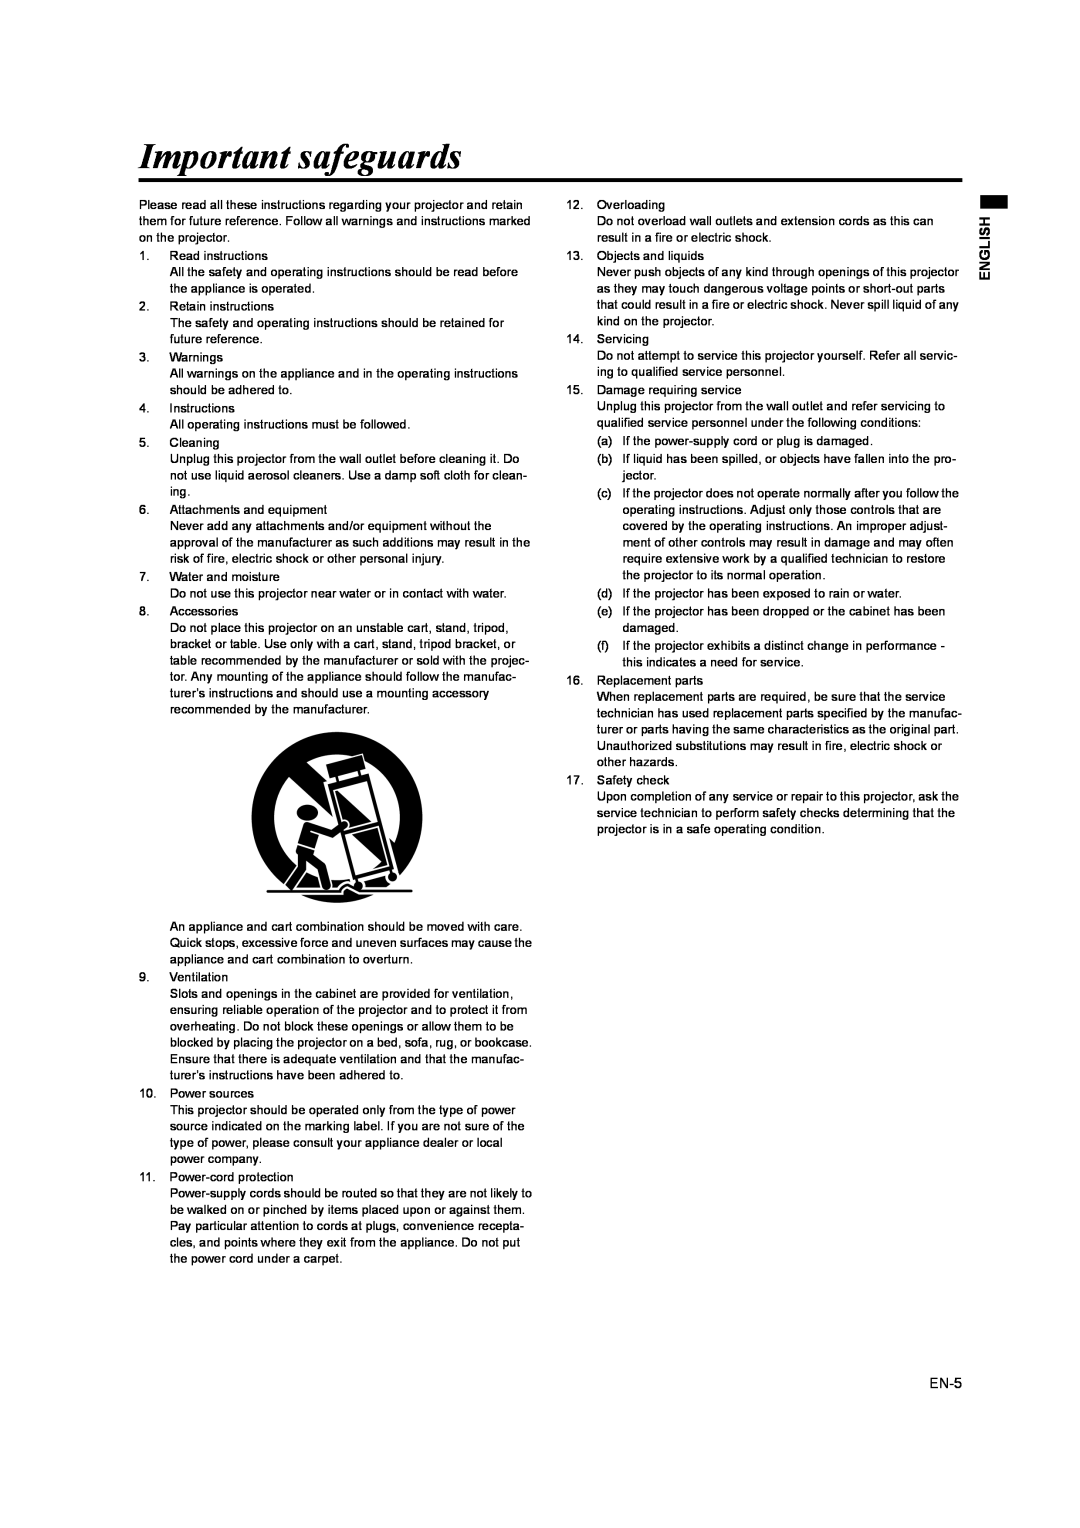 Mitsubishi Electronics EW270U user manual Important safeguards, EN-5 